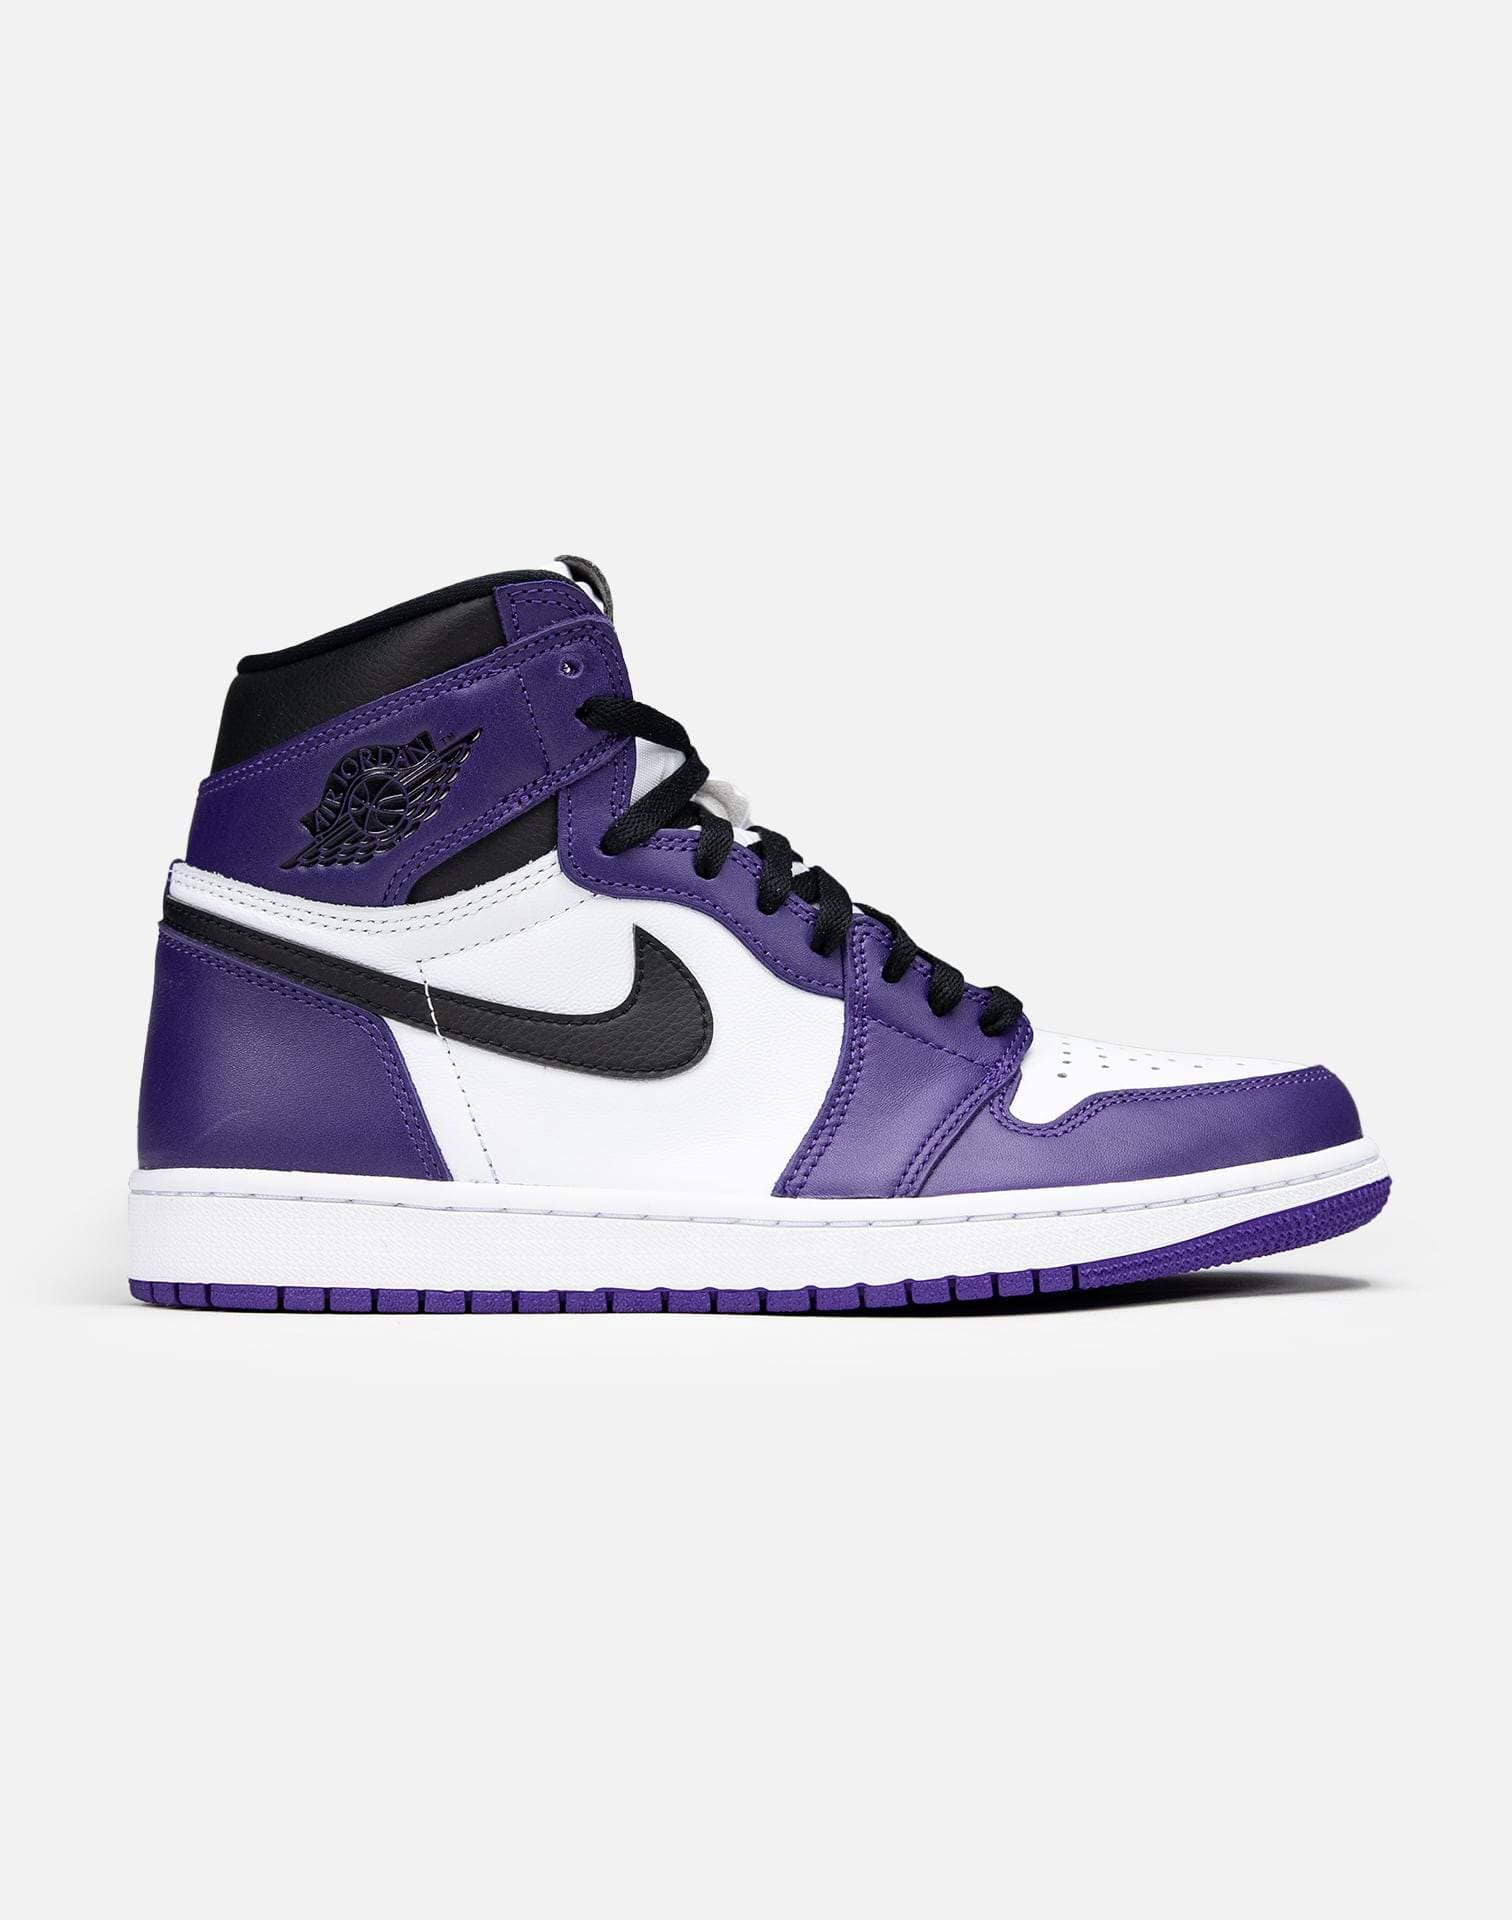 purple 1s